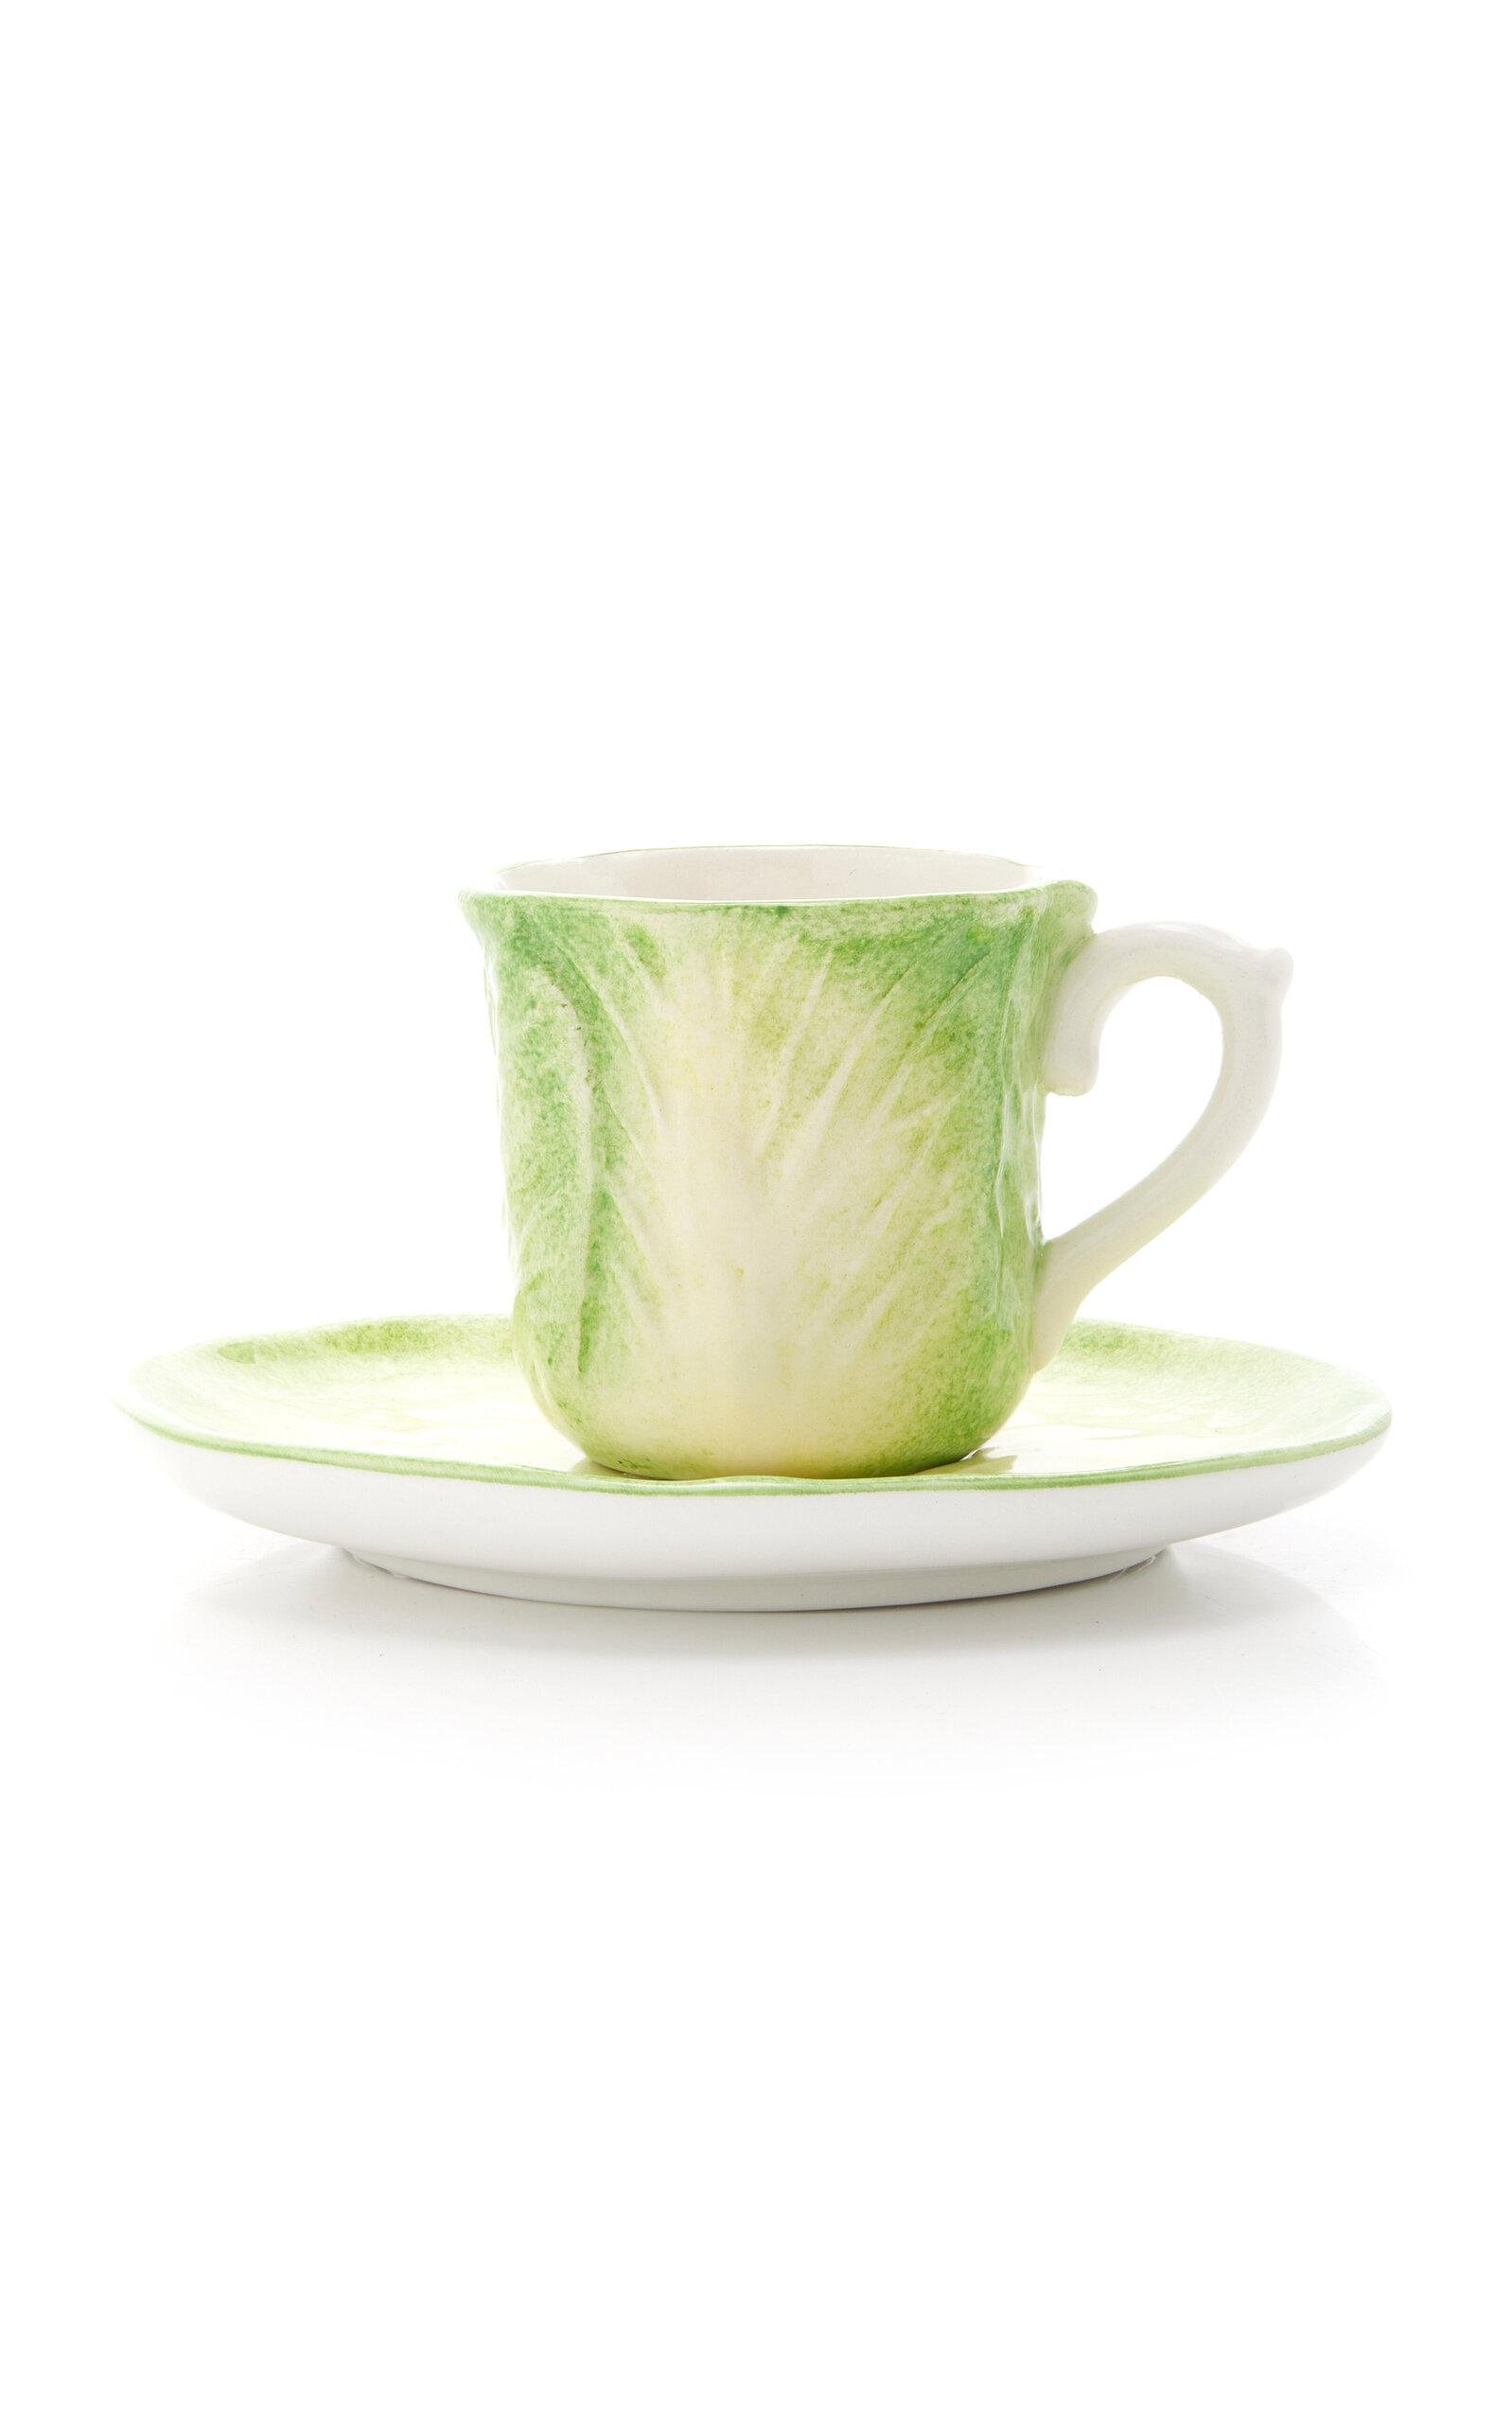 Moda Domus - Cabbage Ceramic Coffee Cup and Saucer - Green - Moda Operandi by MODA DOMUS